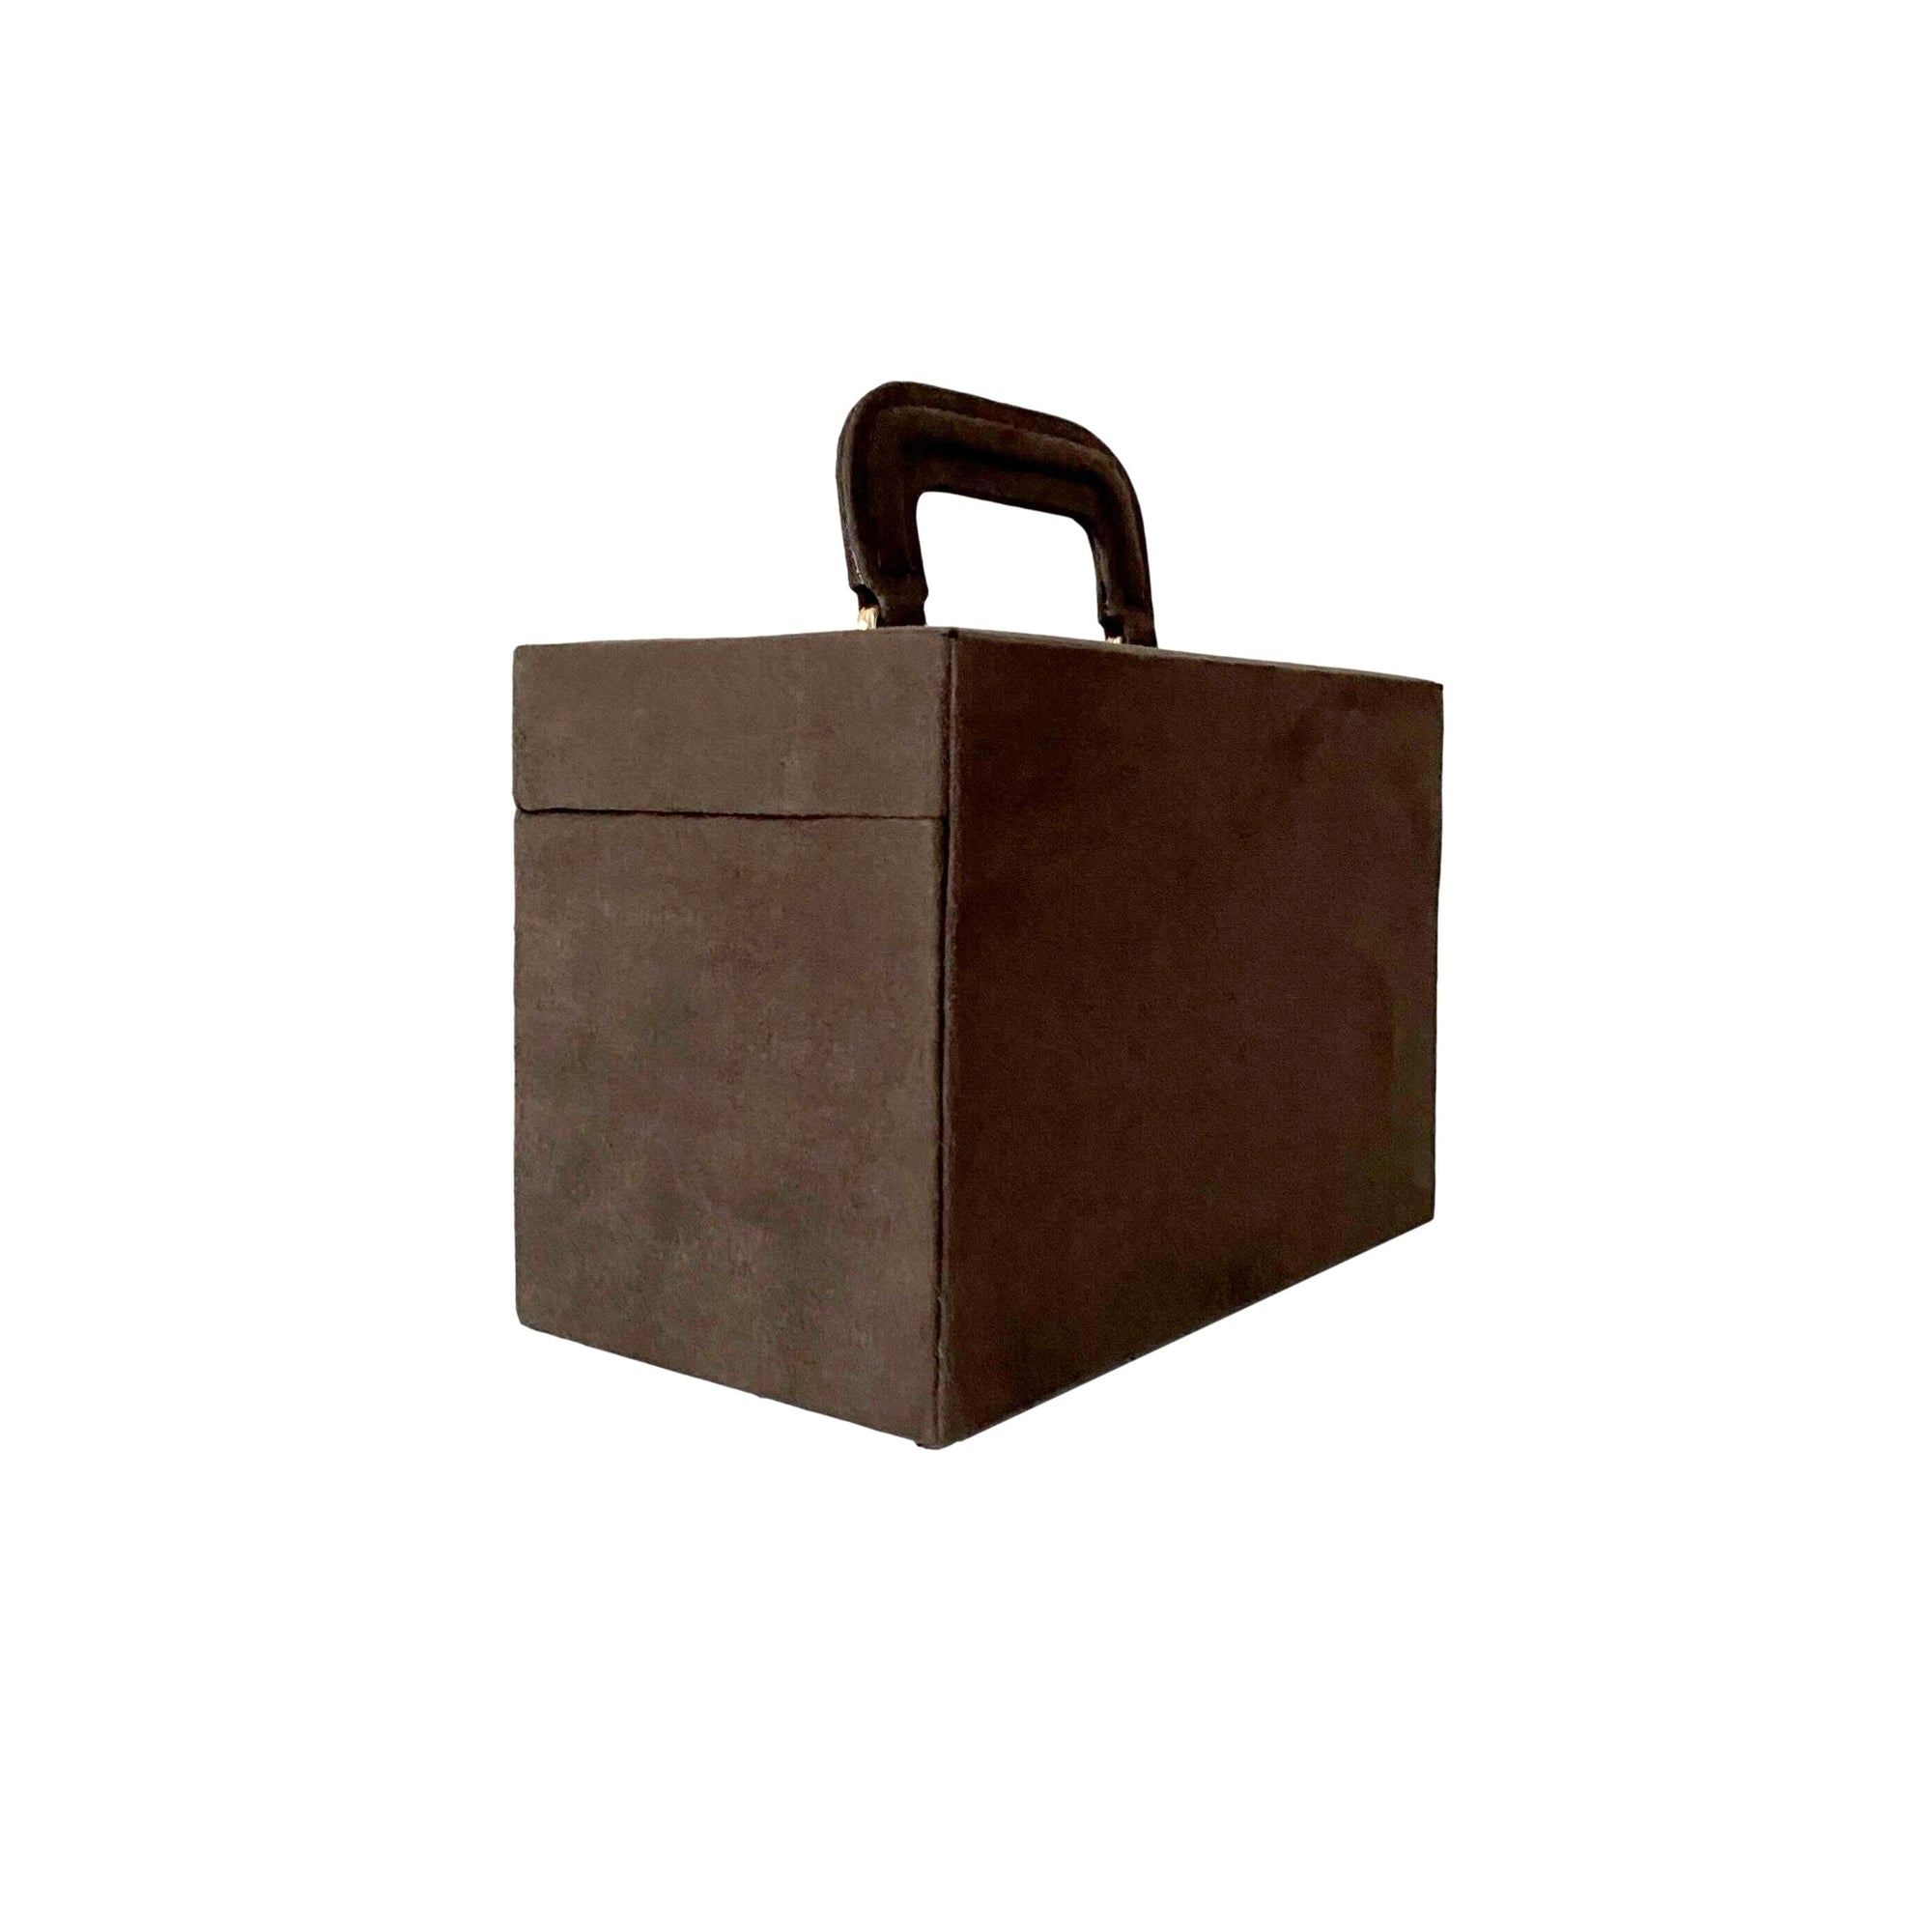 YSL Brown Suede Logo Vanity Box - Handbags